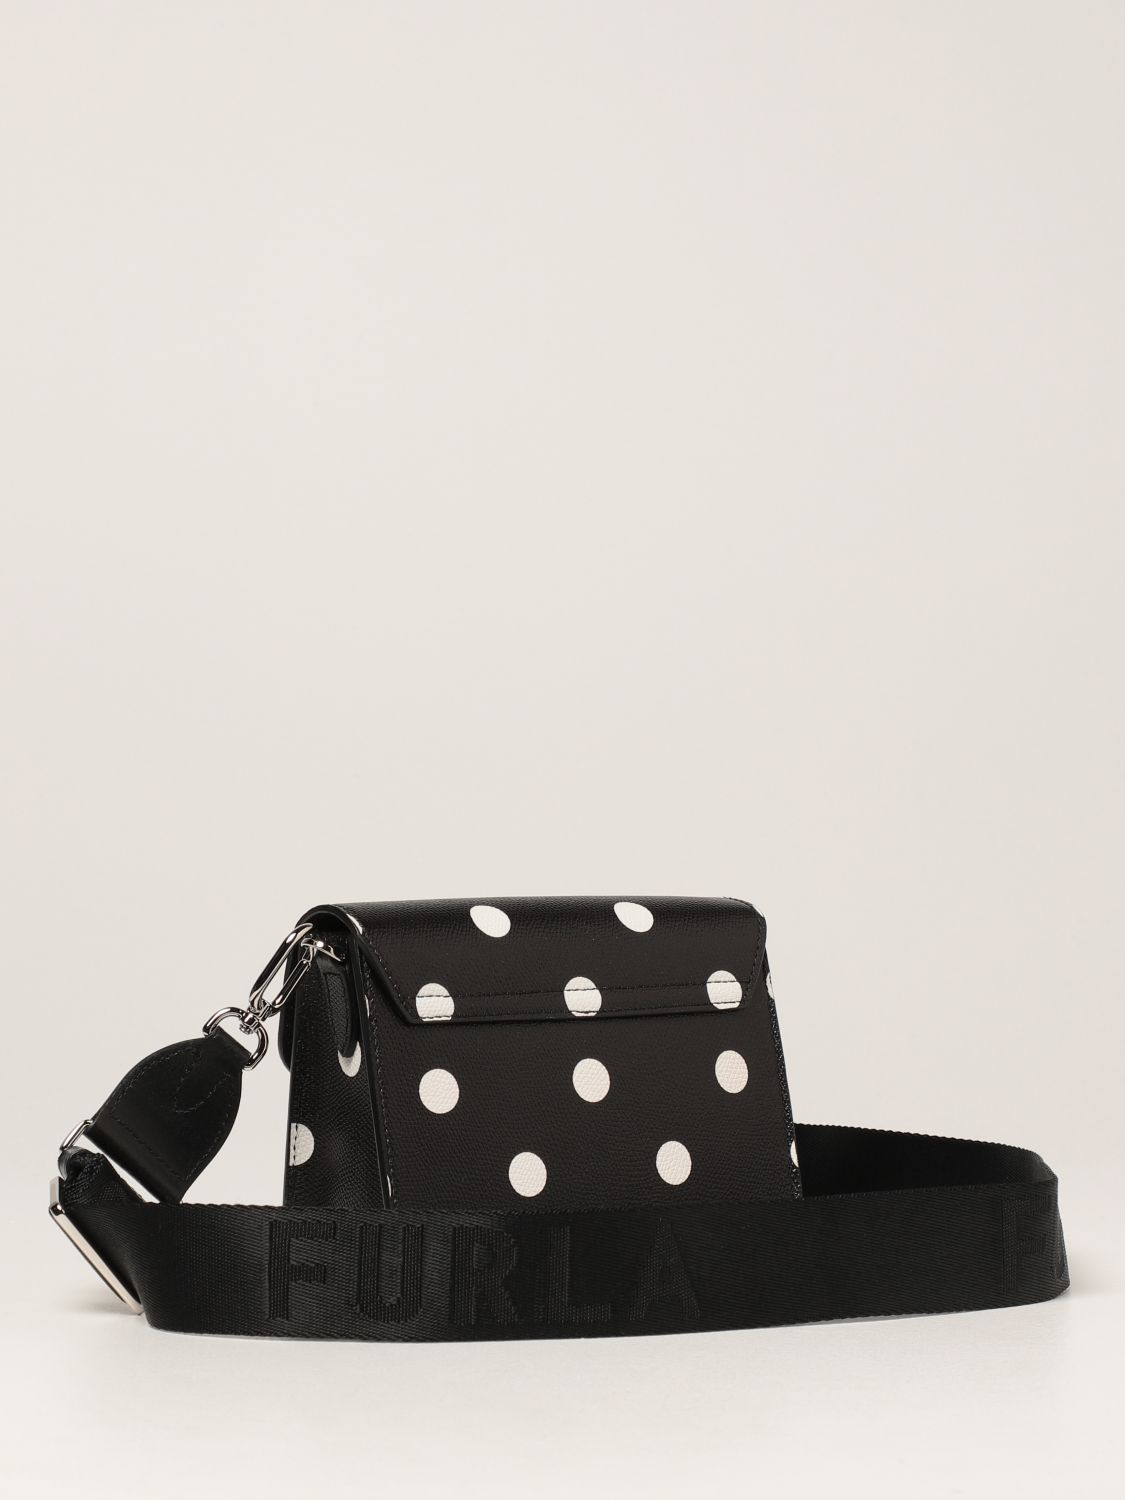 FURLA: Metropolis bag in polka dot leather - Black  Furla mini bag  WB00217AX0766 online at